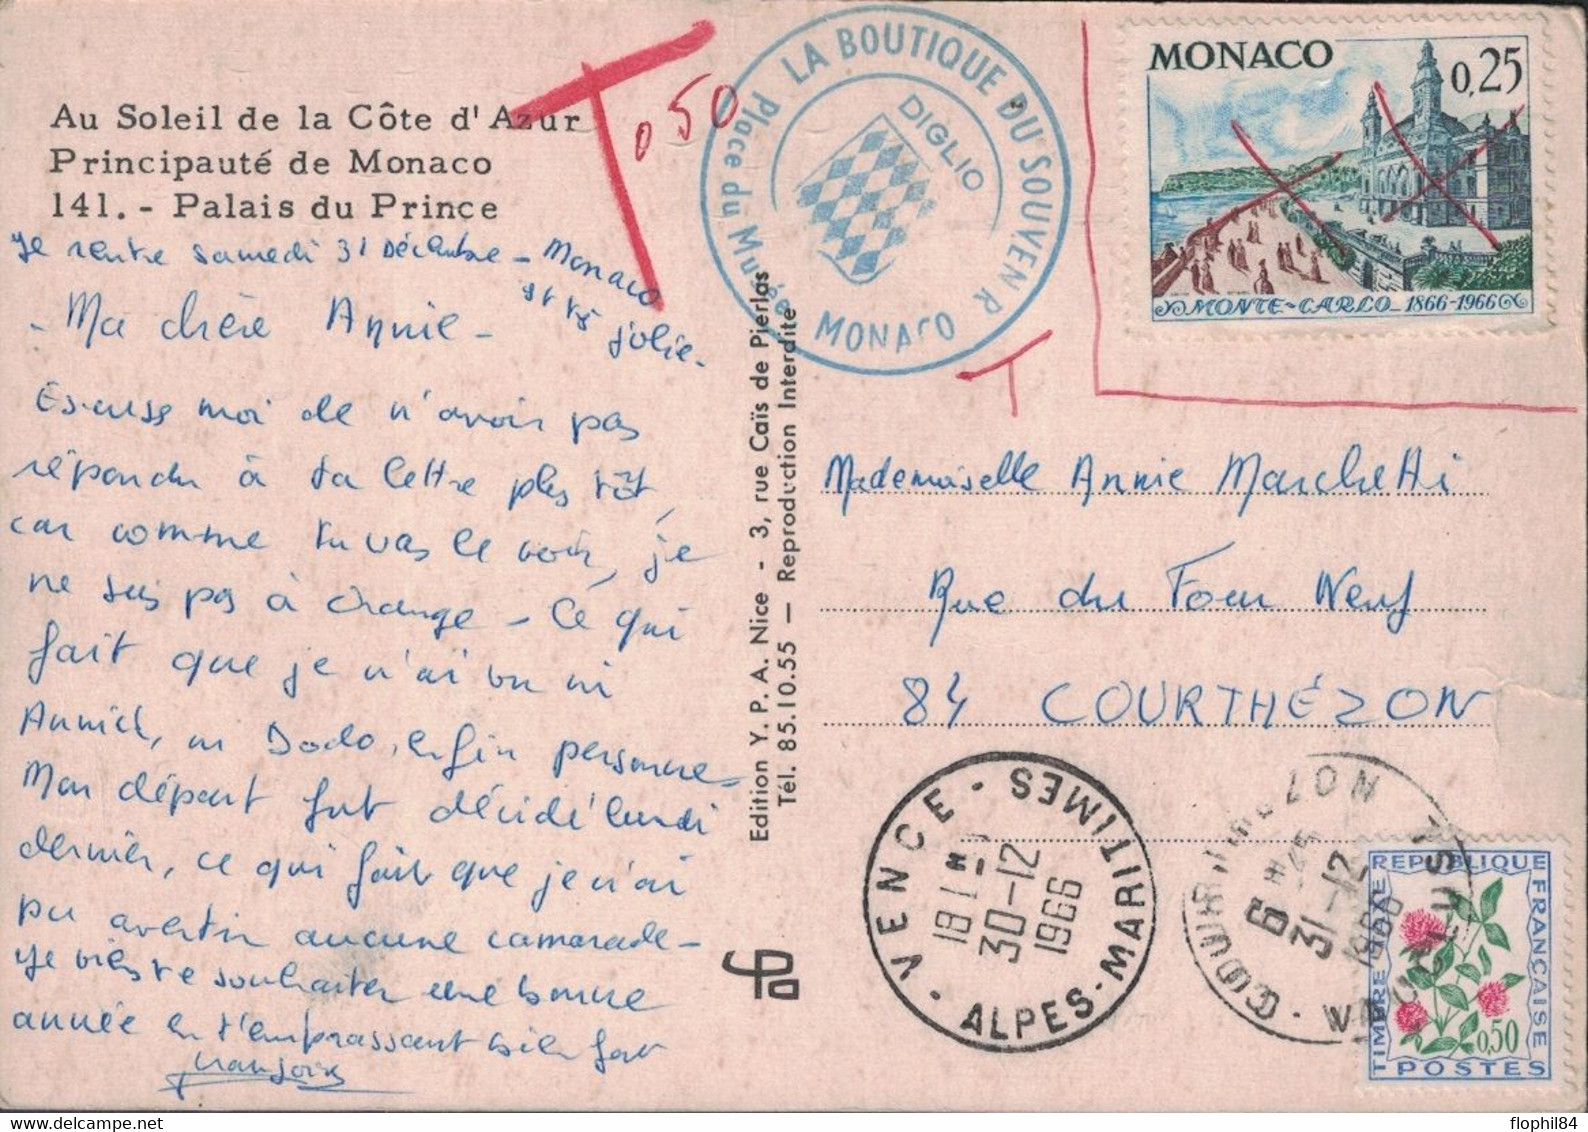 ALPES MARITIMES - VENCE - TIMBRE DE MONACO - NON ACCEPTE AVEC T DE TAXE - TAXE A COURTHEZON - VAUCLUSE - 1859-1959 Lettres & Documents